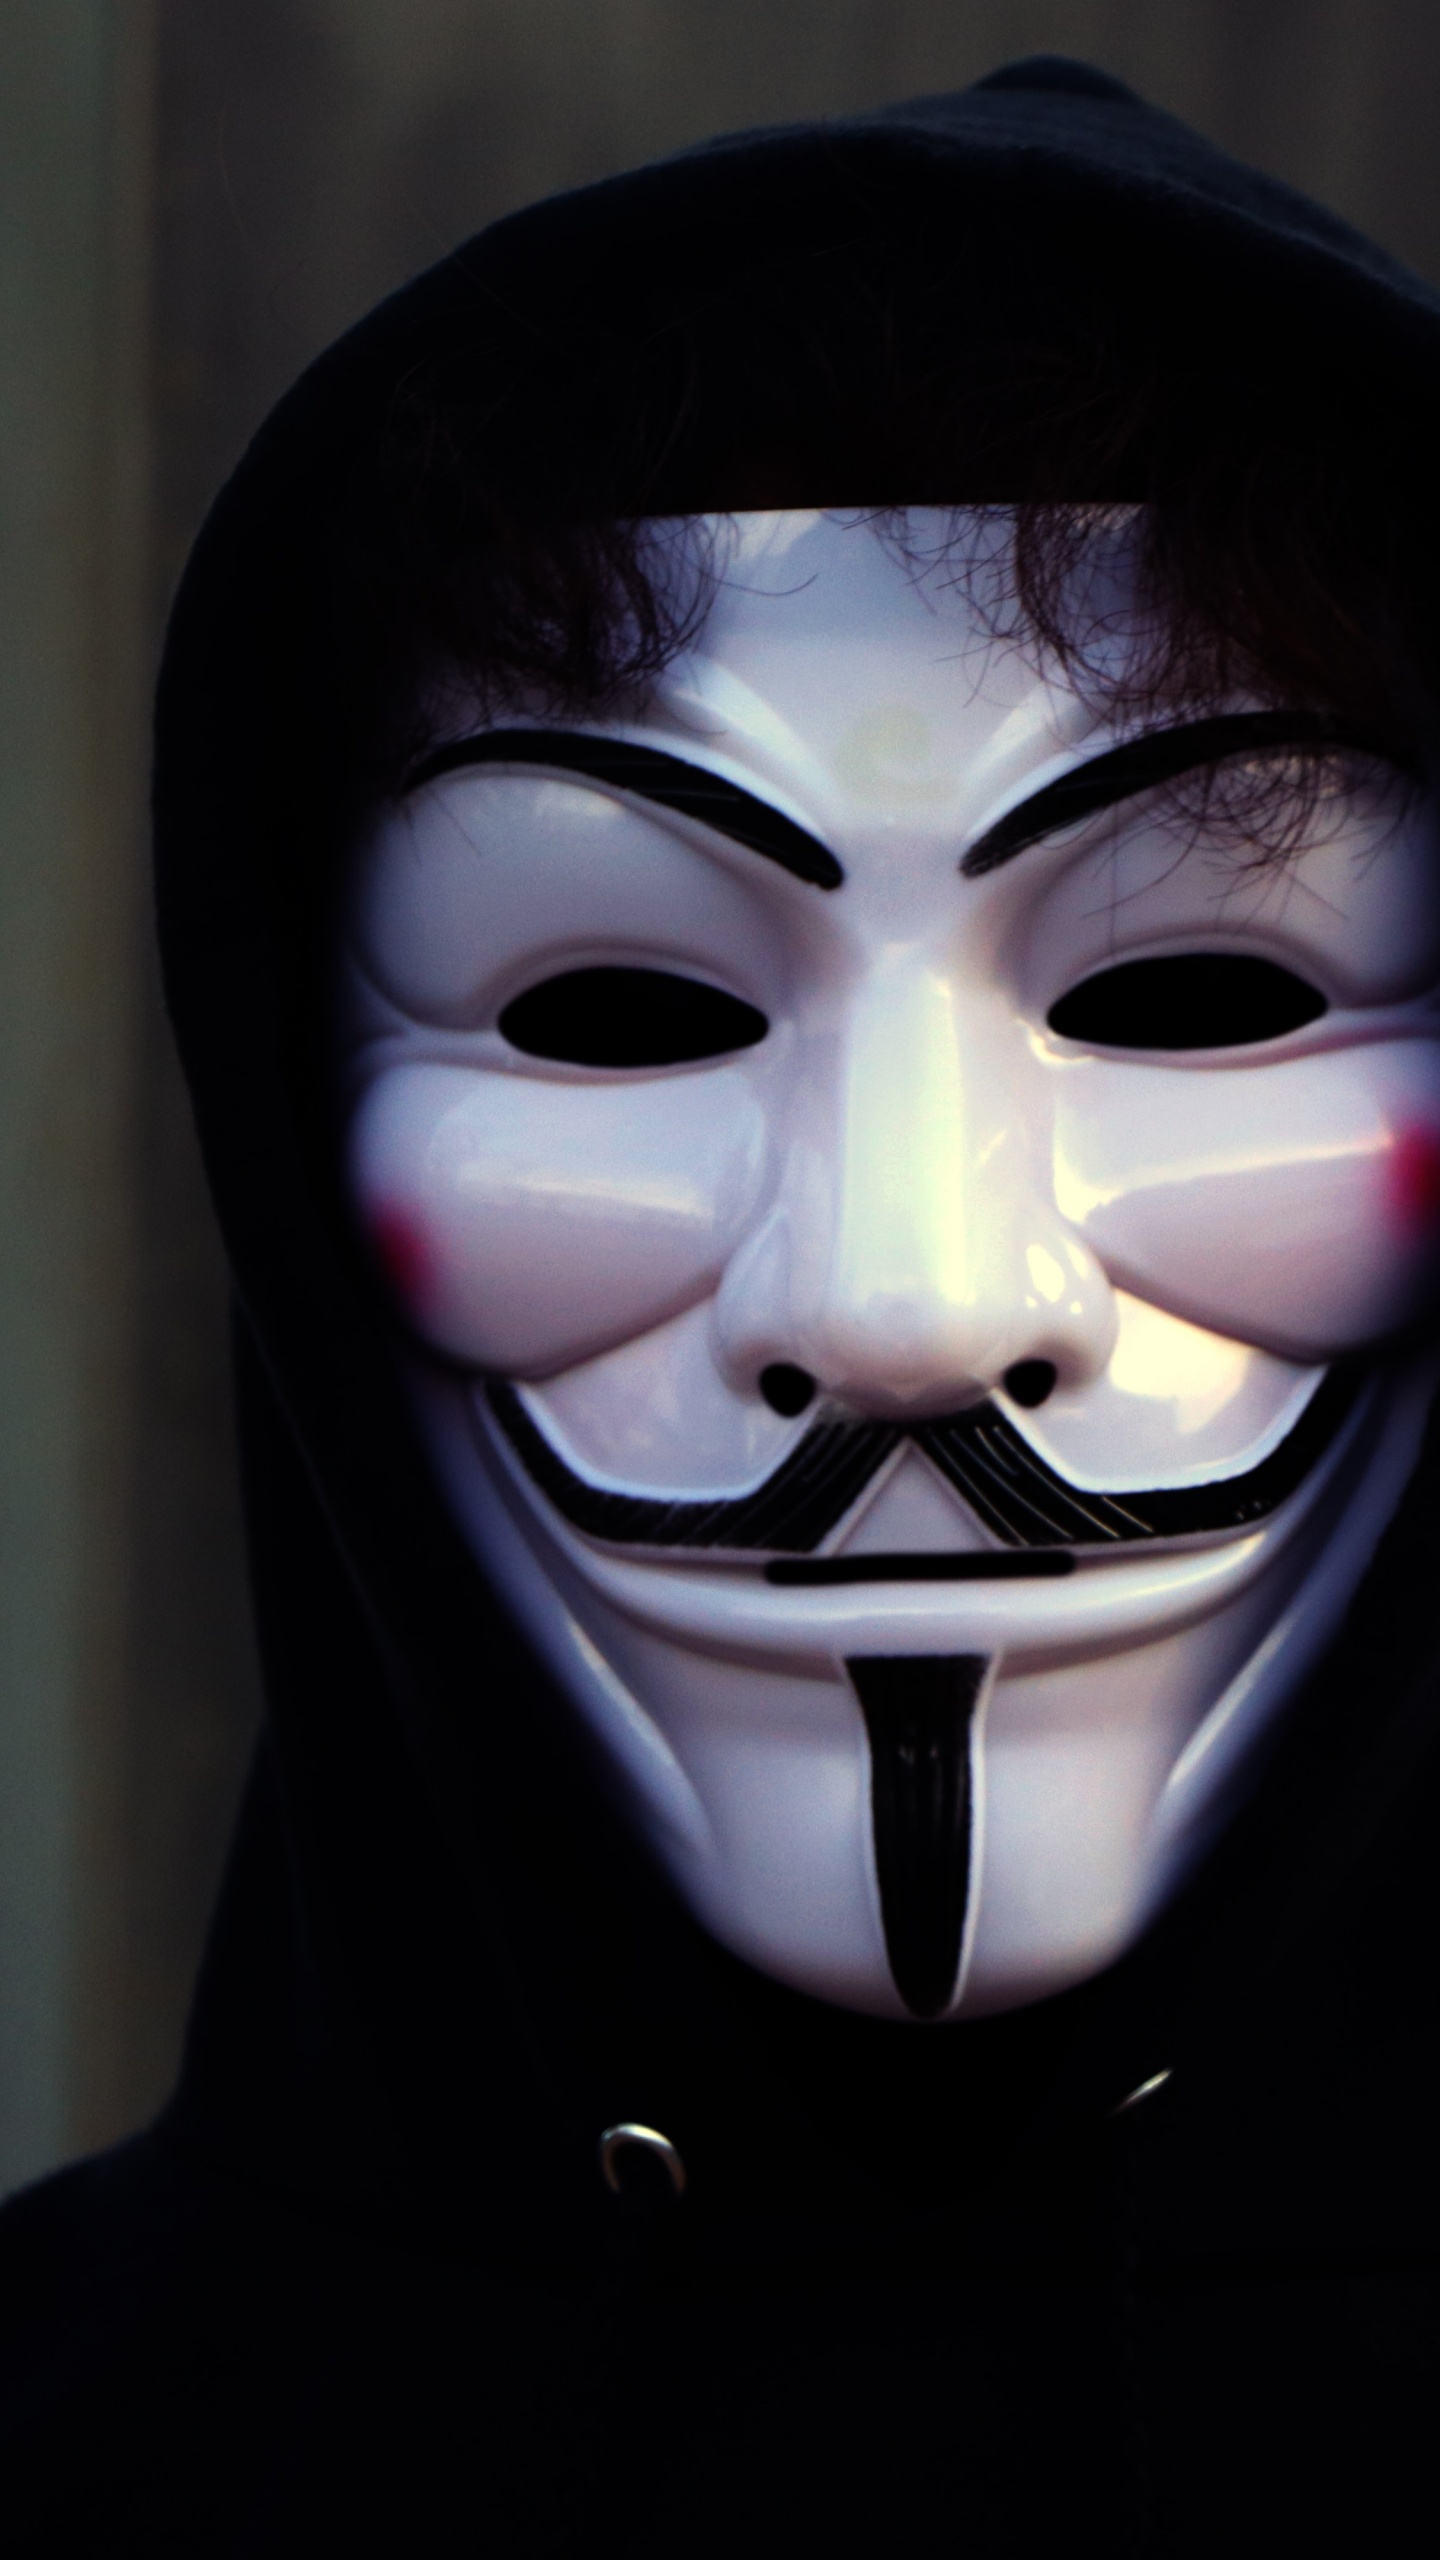 Man in Mask Wallpaper 4K, Anonymous, White masks, Black Hoodie